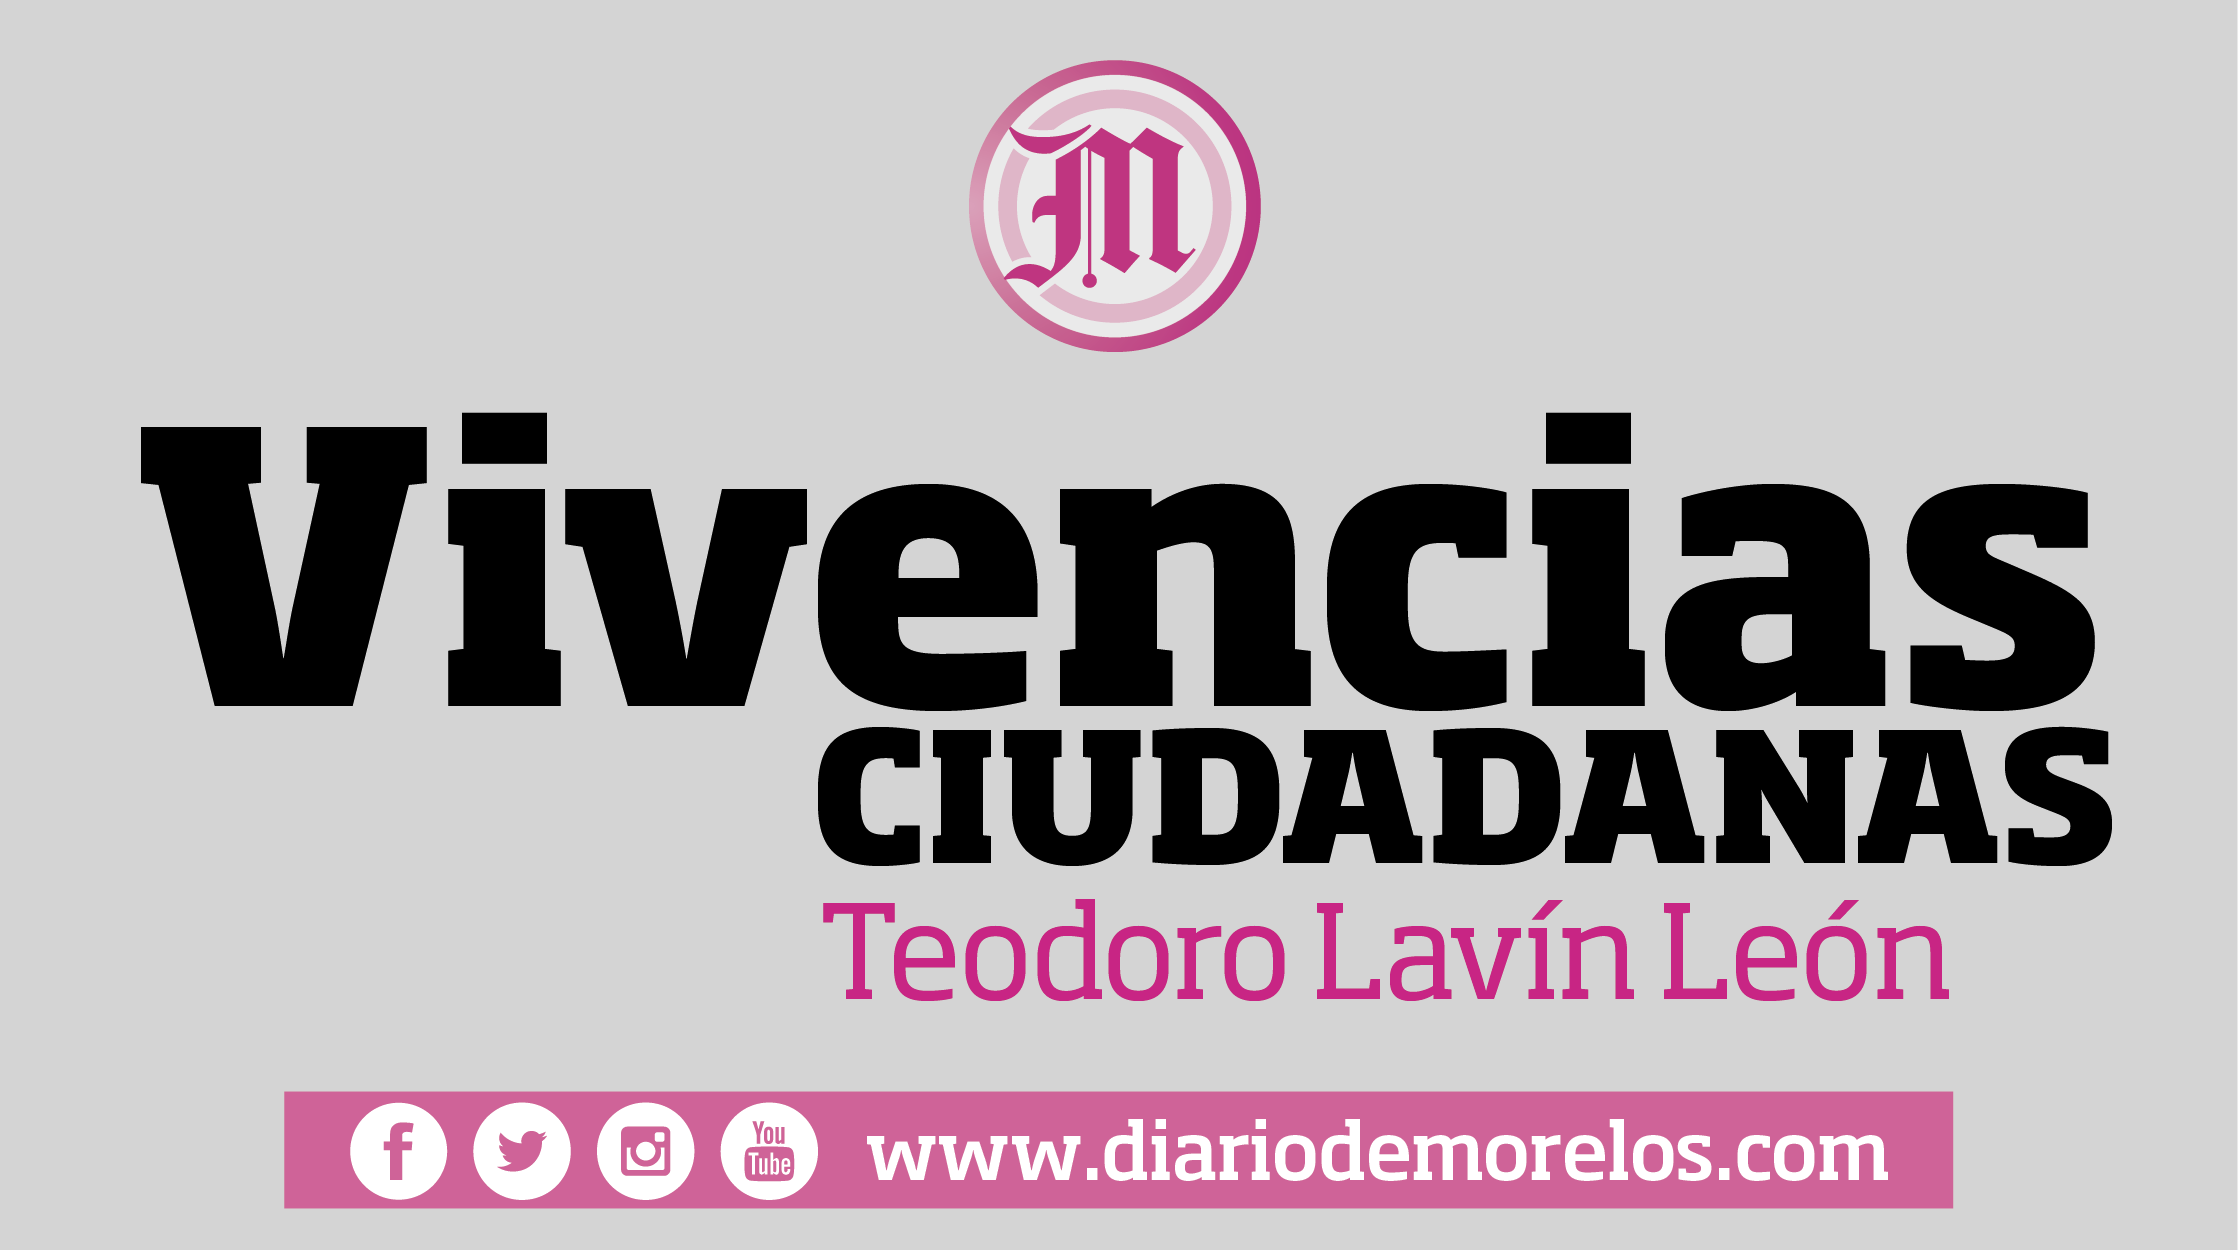 Teodoro Lavín León  lavinleon@gmail.com Twitter: @teolavin